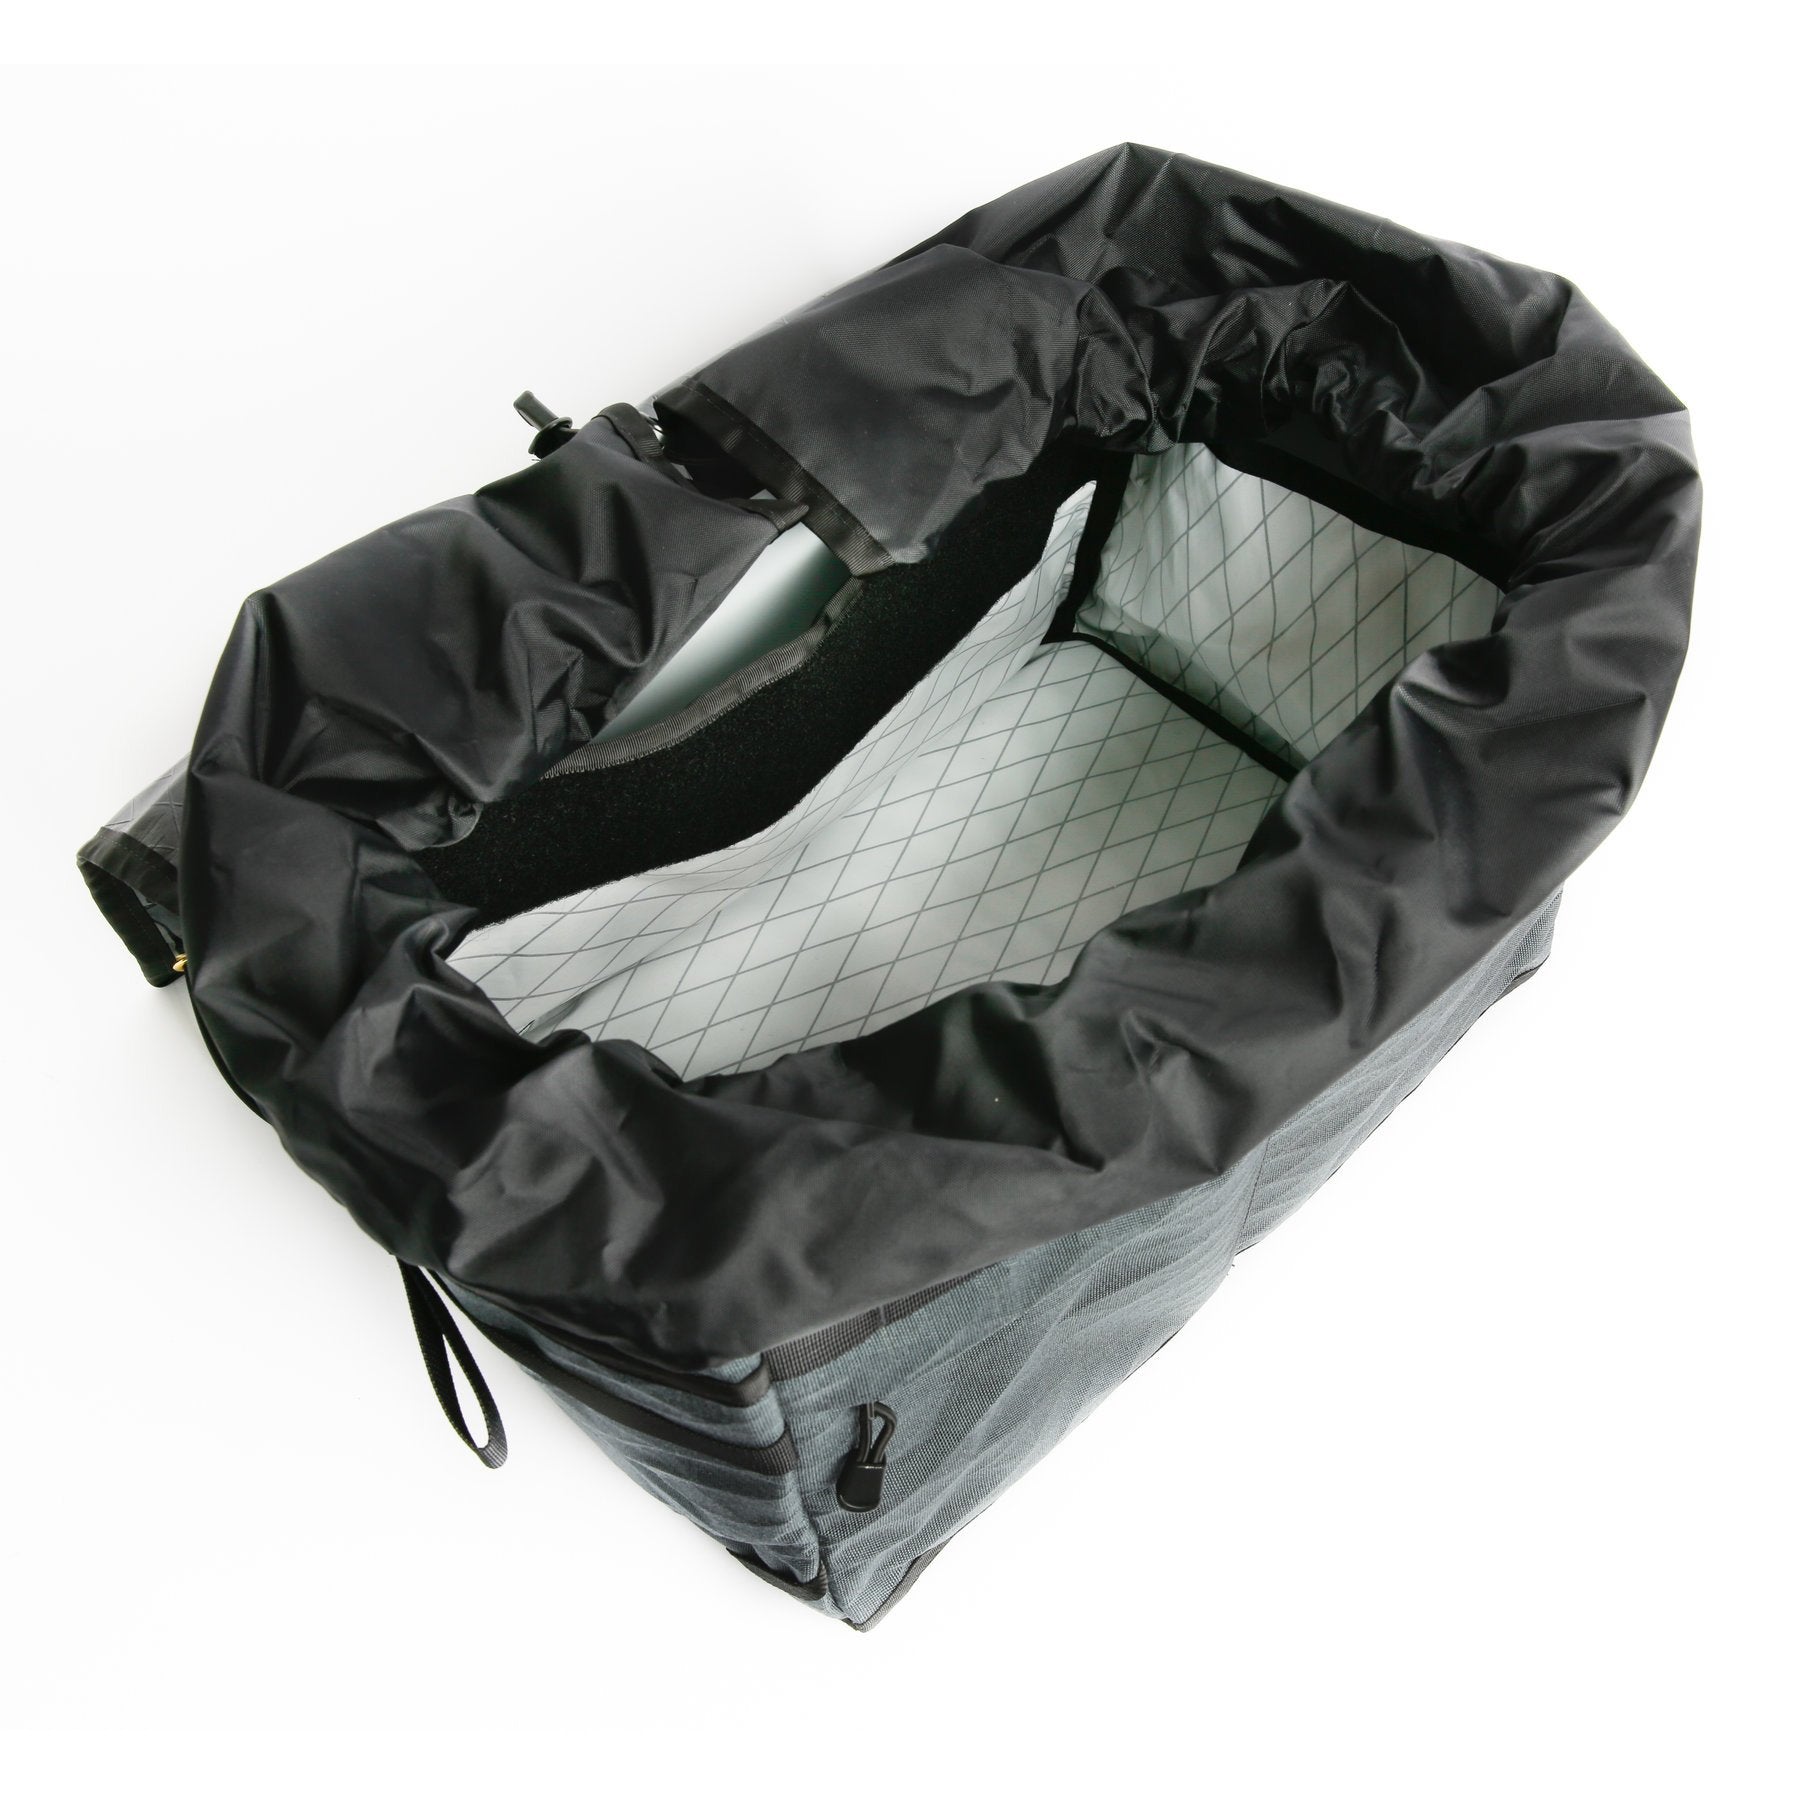 OUTER SHELL ADVENTURE Rack Bag